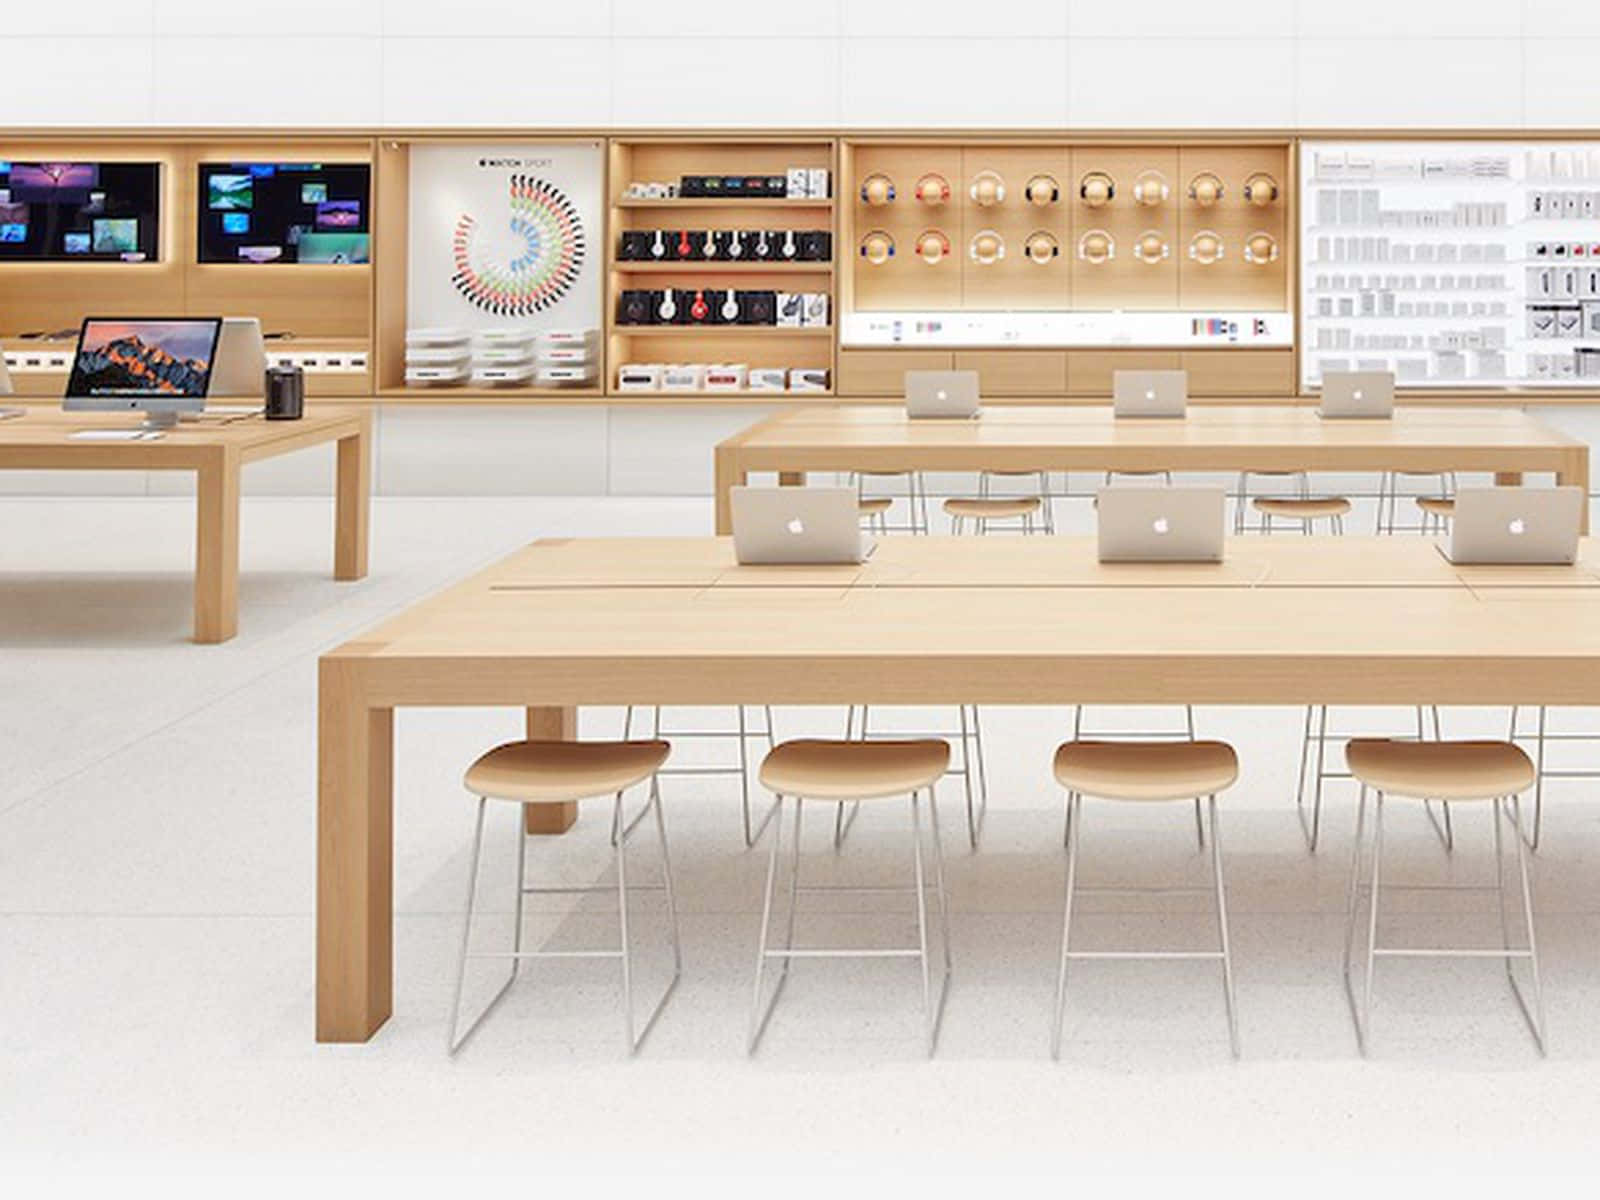 Apple Store Interior Display Wallpaper